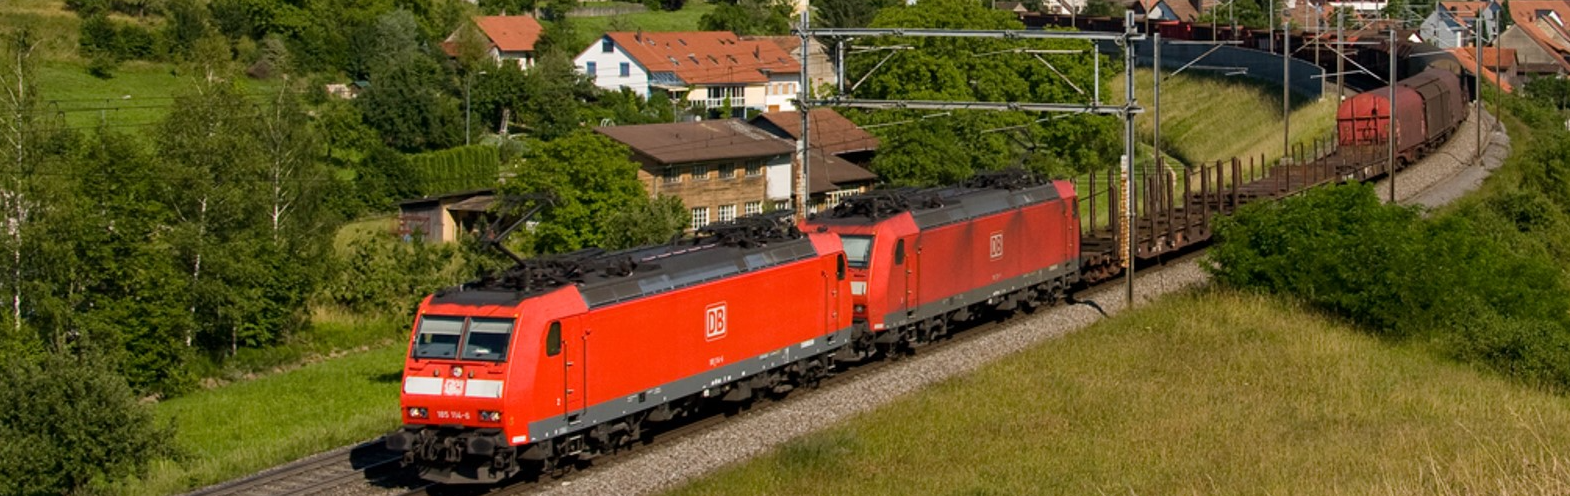 Rote Lokomotiven